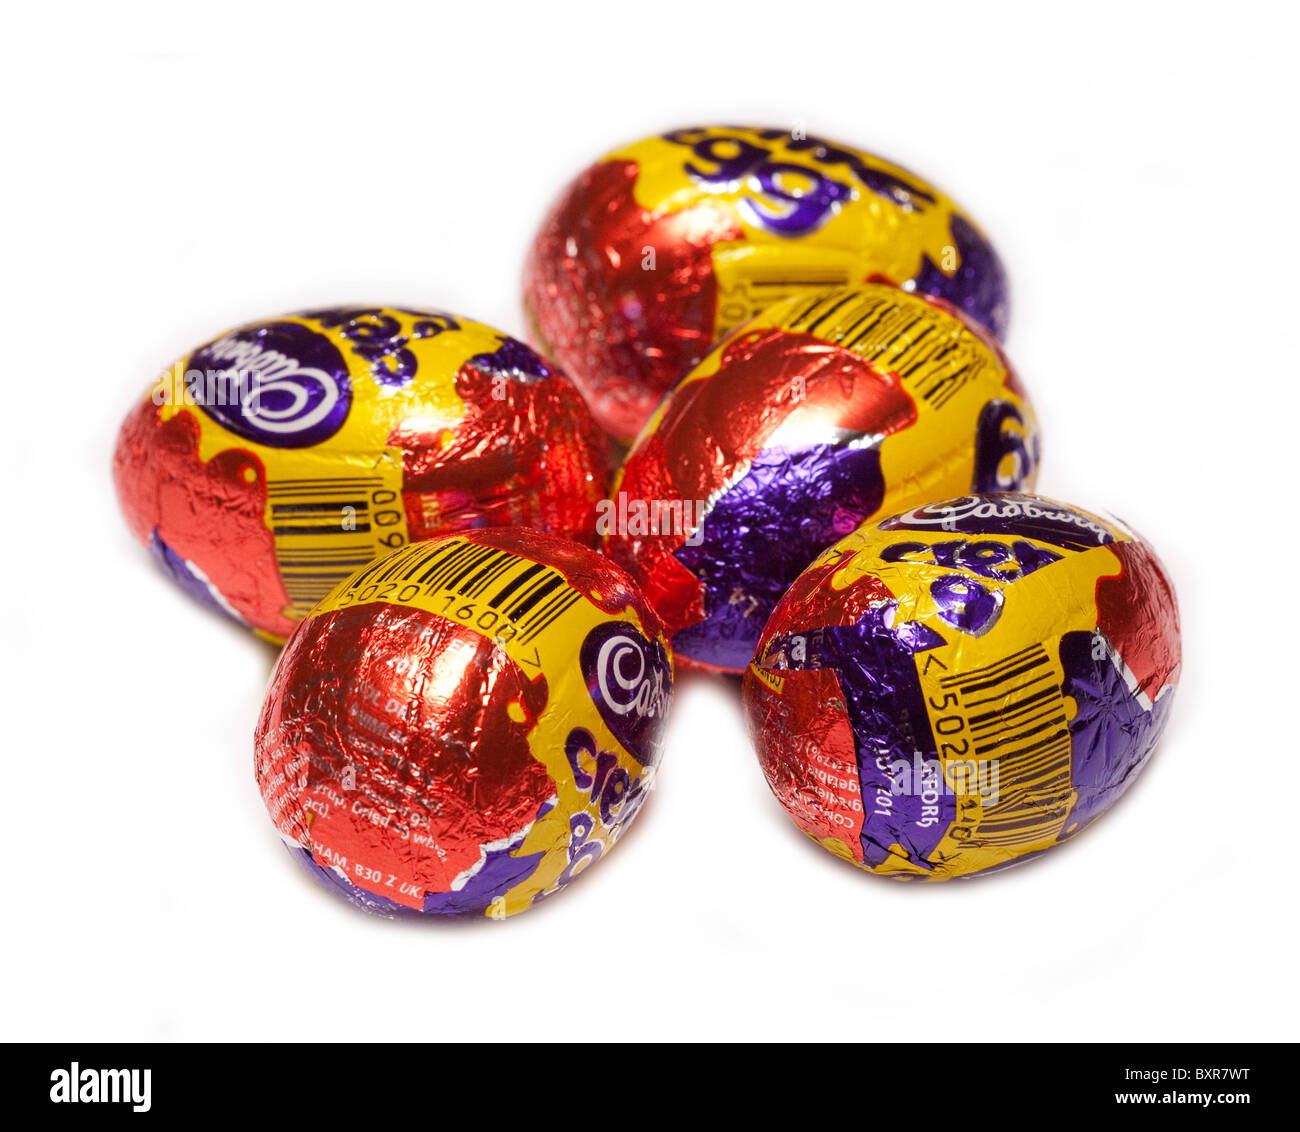 Cadburys creme chocolate easter eggs Stock Photo